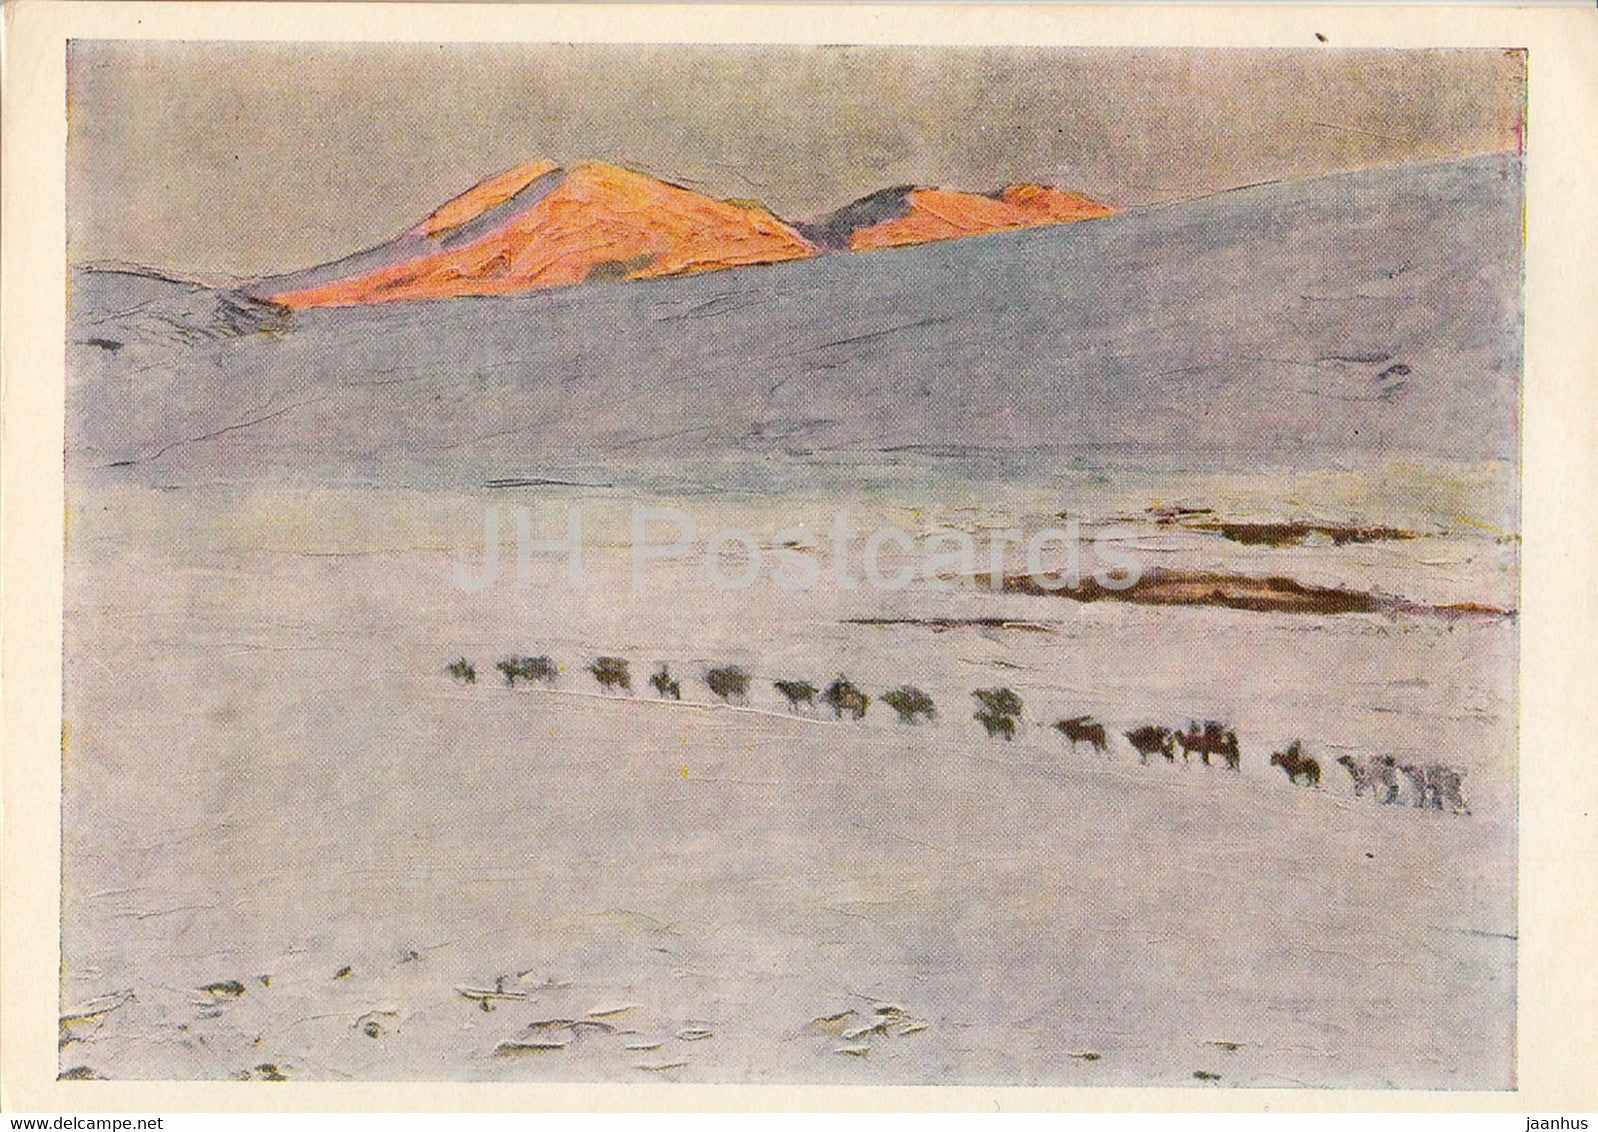 painting by A. Stroganov - Camel Caravan - Mongolian art - 1966 - Russia USSR - unused - JH Postcards